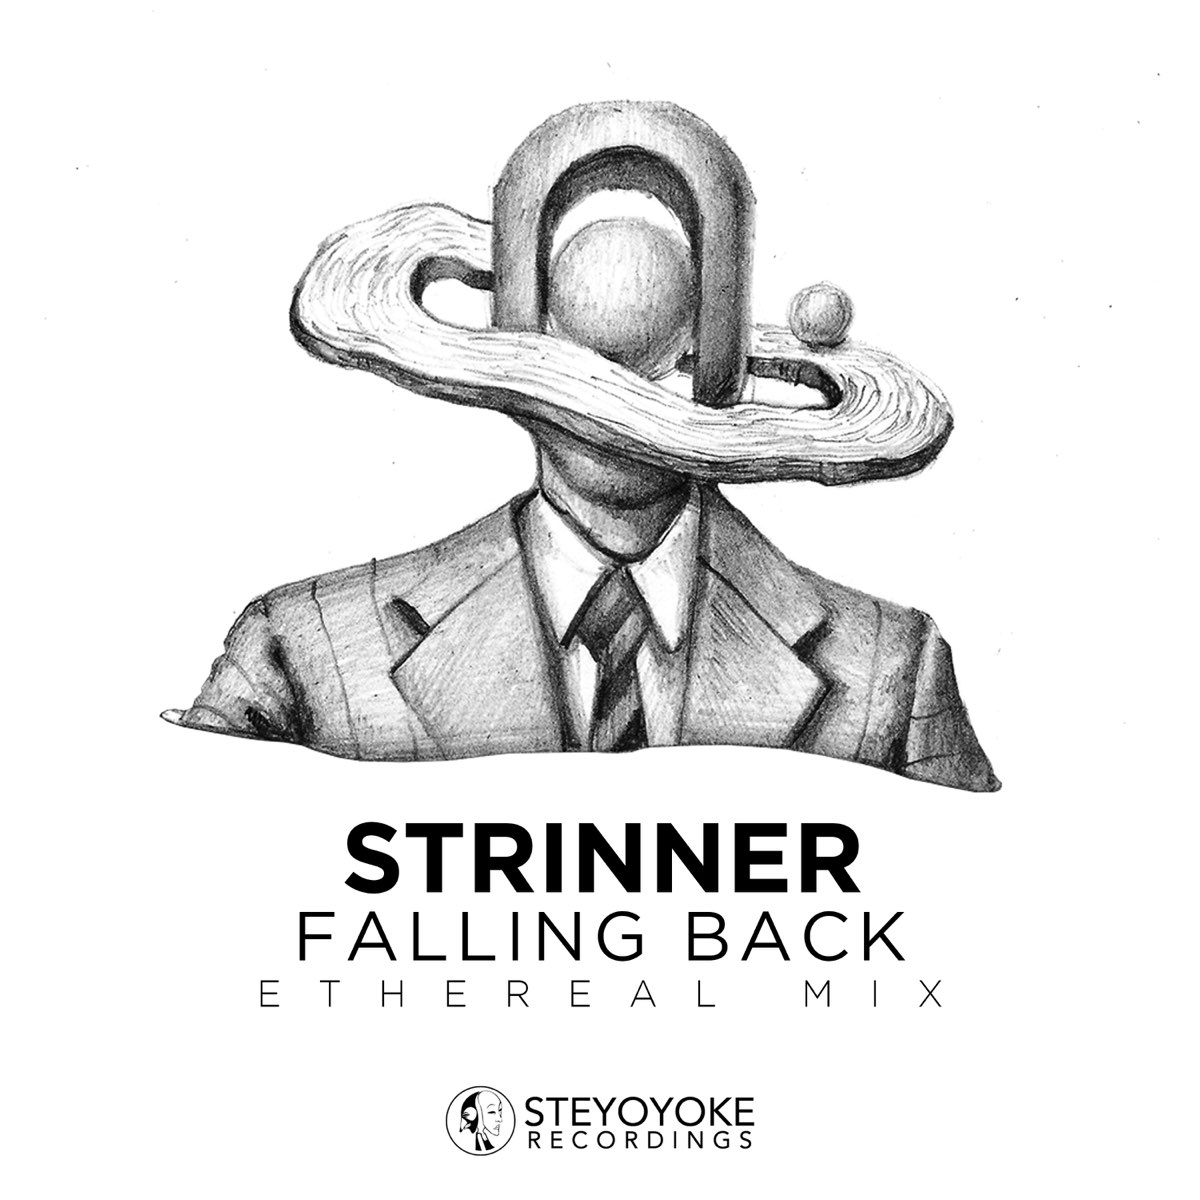 Falling back. Картинки в стиле Steyoyoke. Strinner - Falling back (Original Mix). Grammik - convolve (Original Mix). Nick Devon, Darko Milosevic - picture from the past (Monarke Remix).